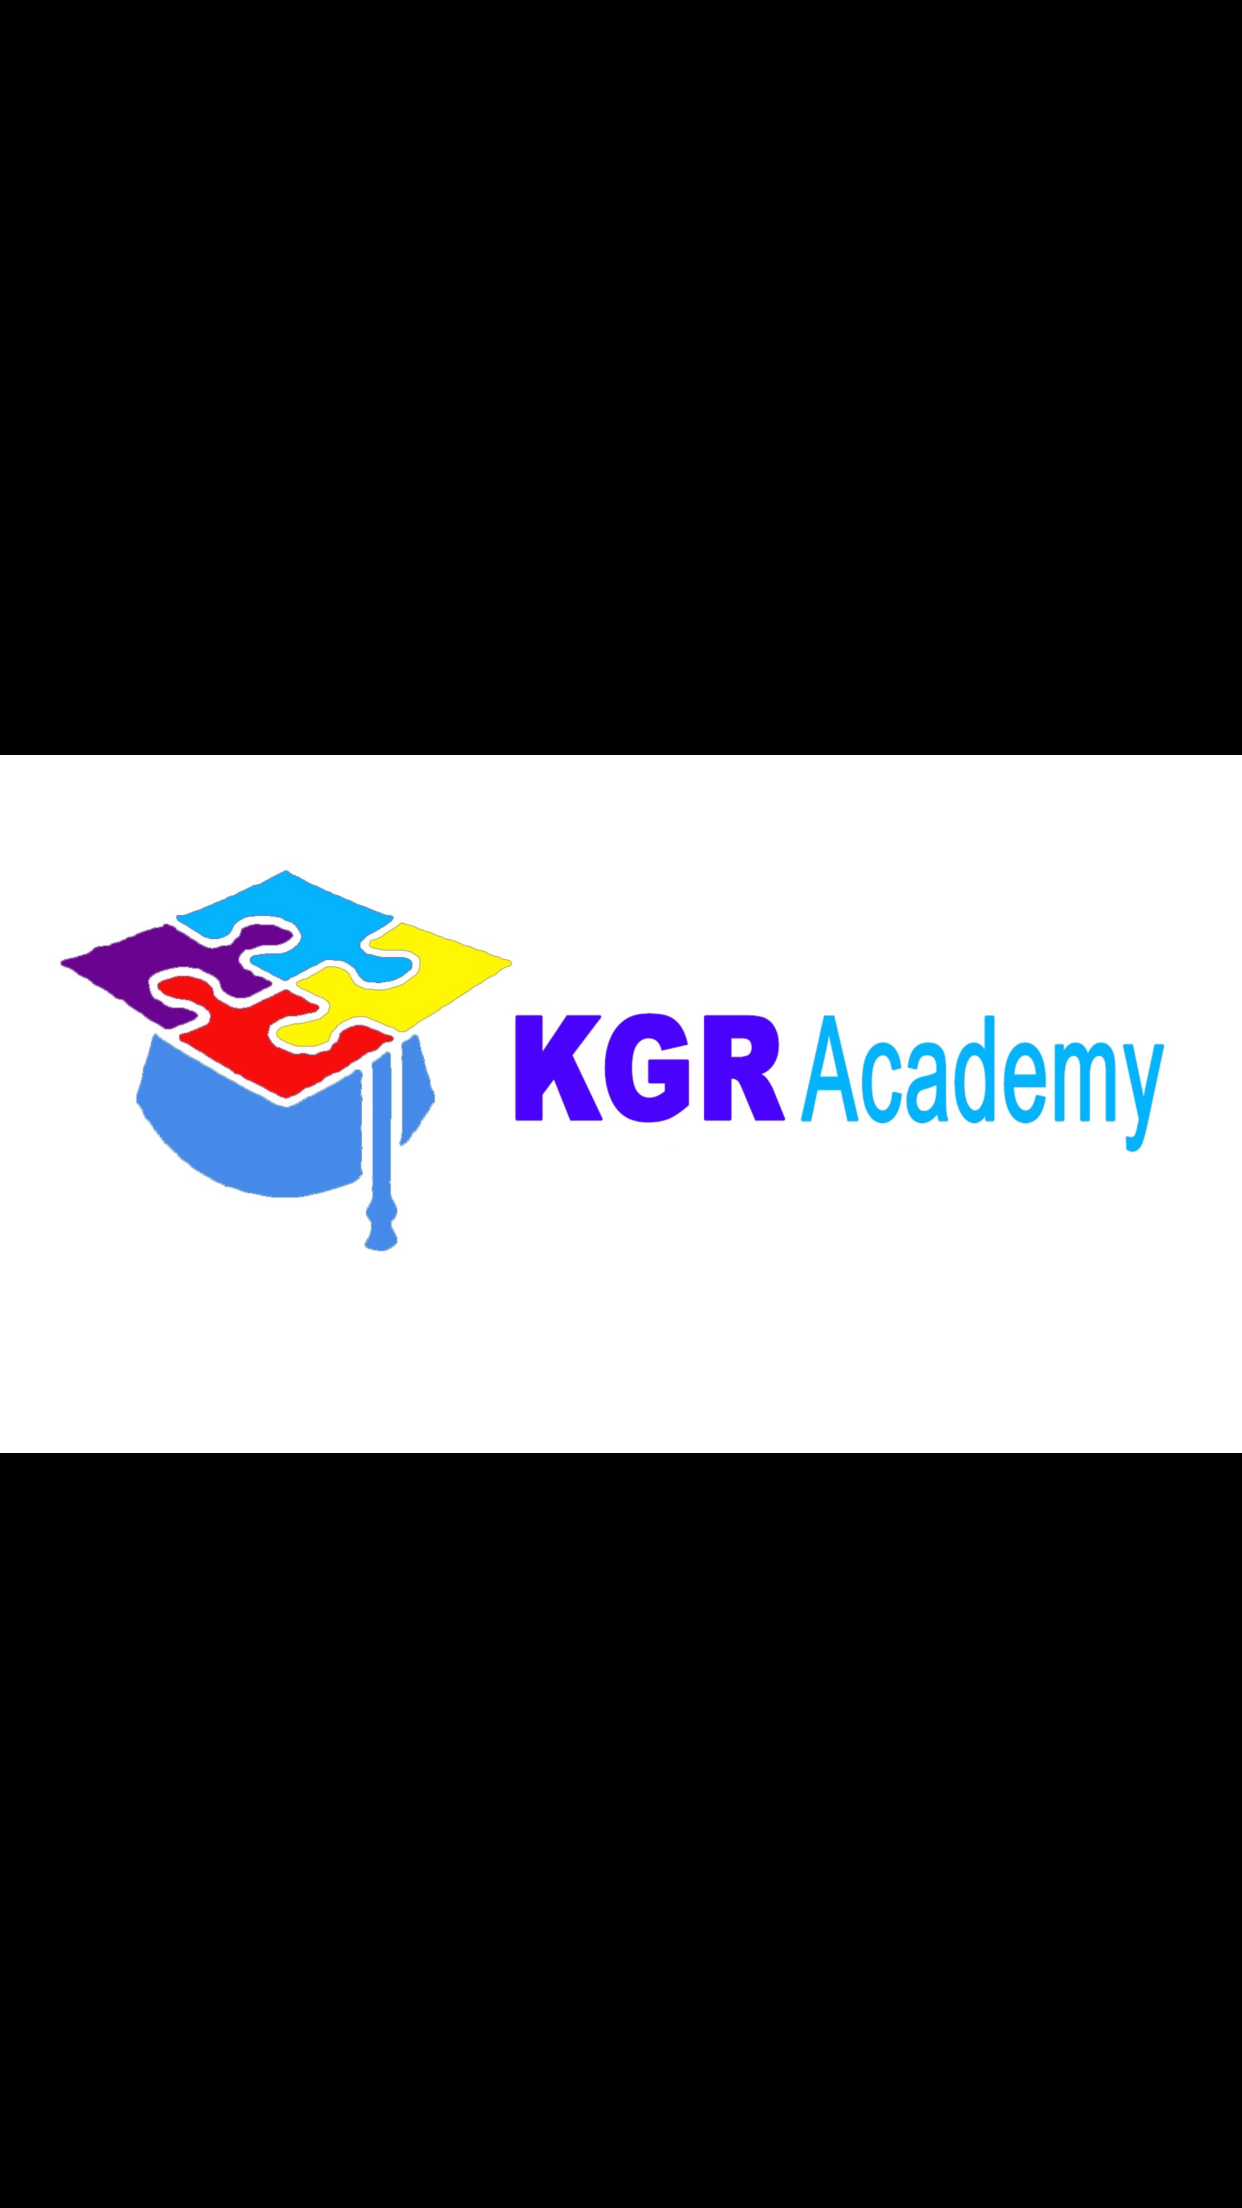 KGR Academy